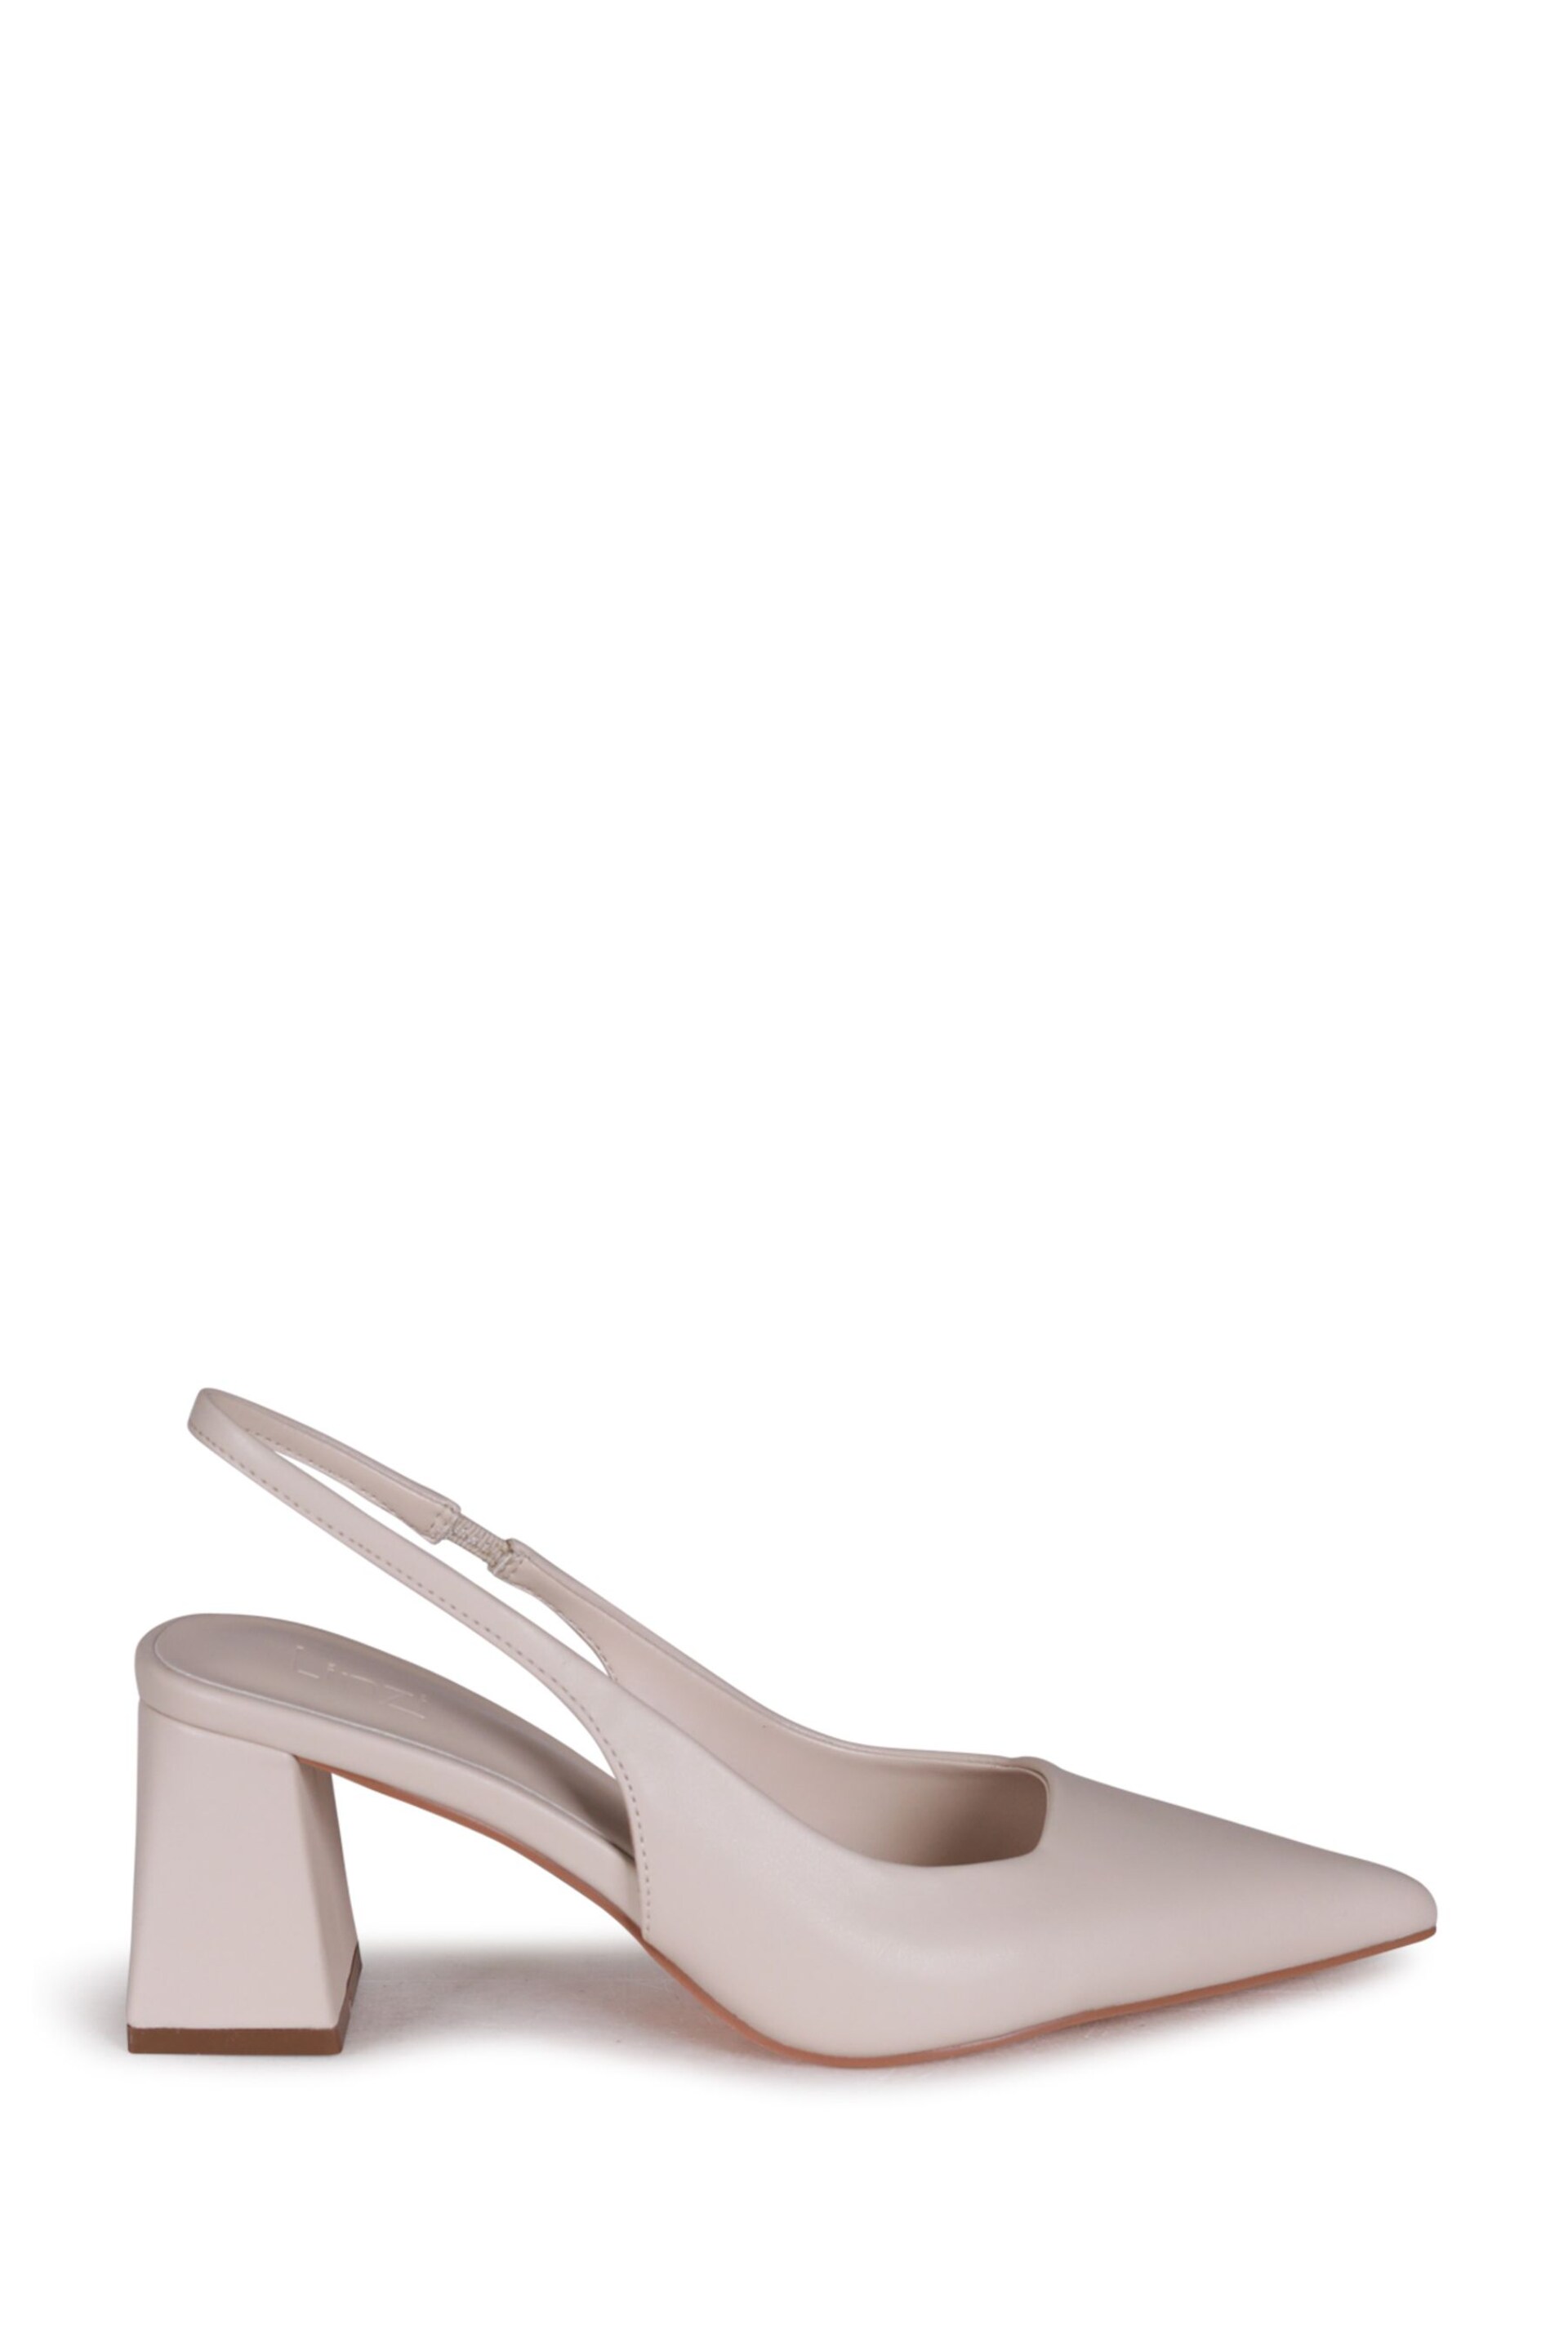 Linzi Cream Elizabeth Slingback Court Shoe With Block Heels - Image 2 of 4